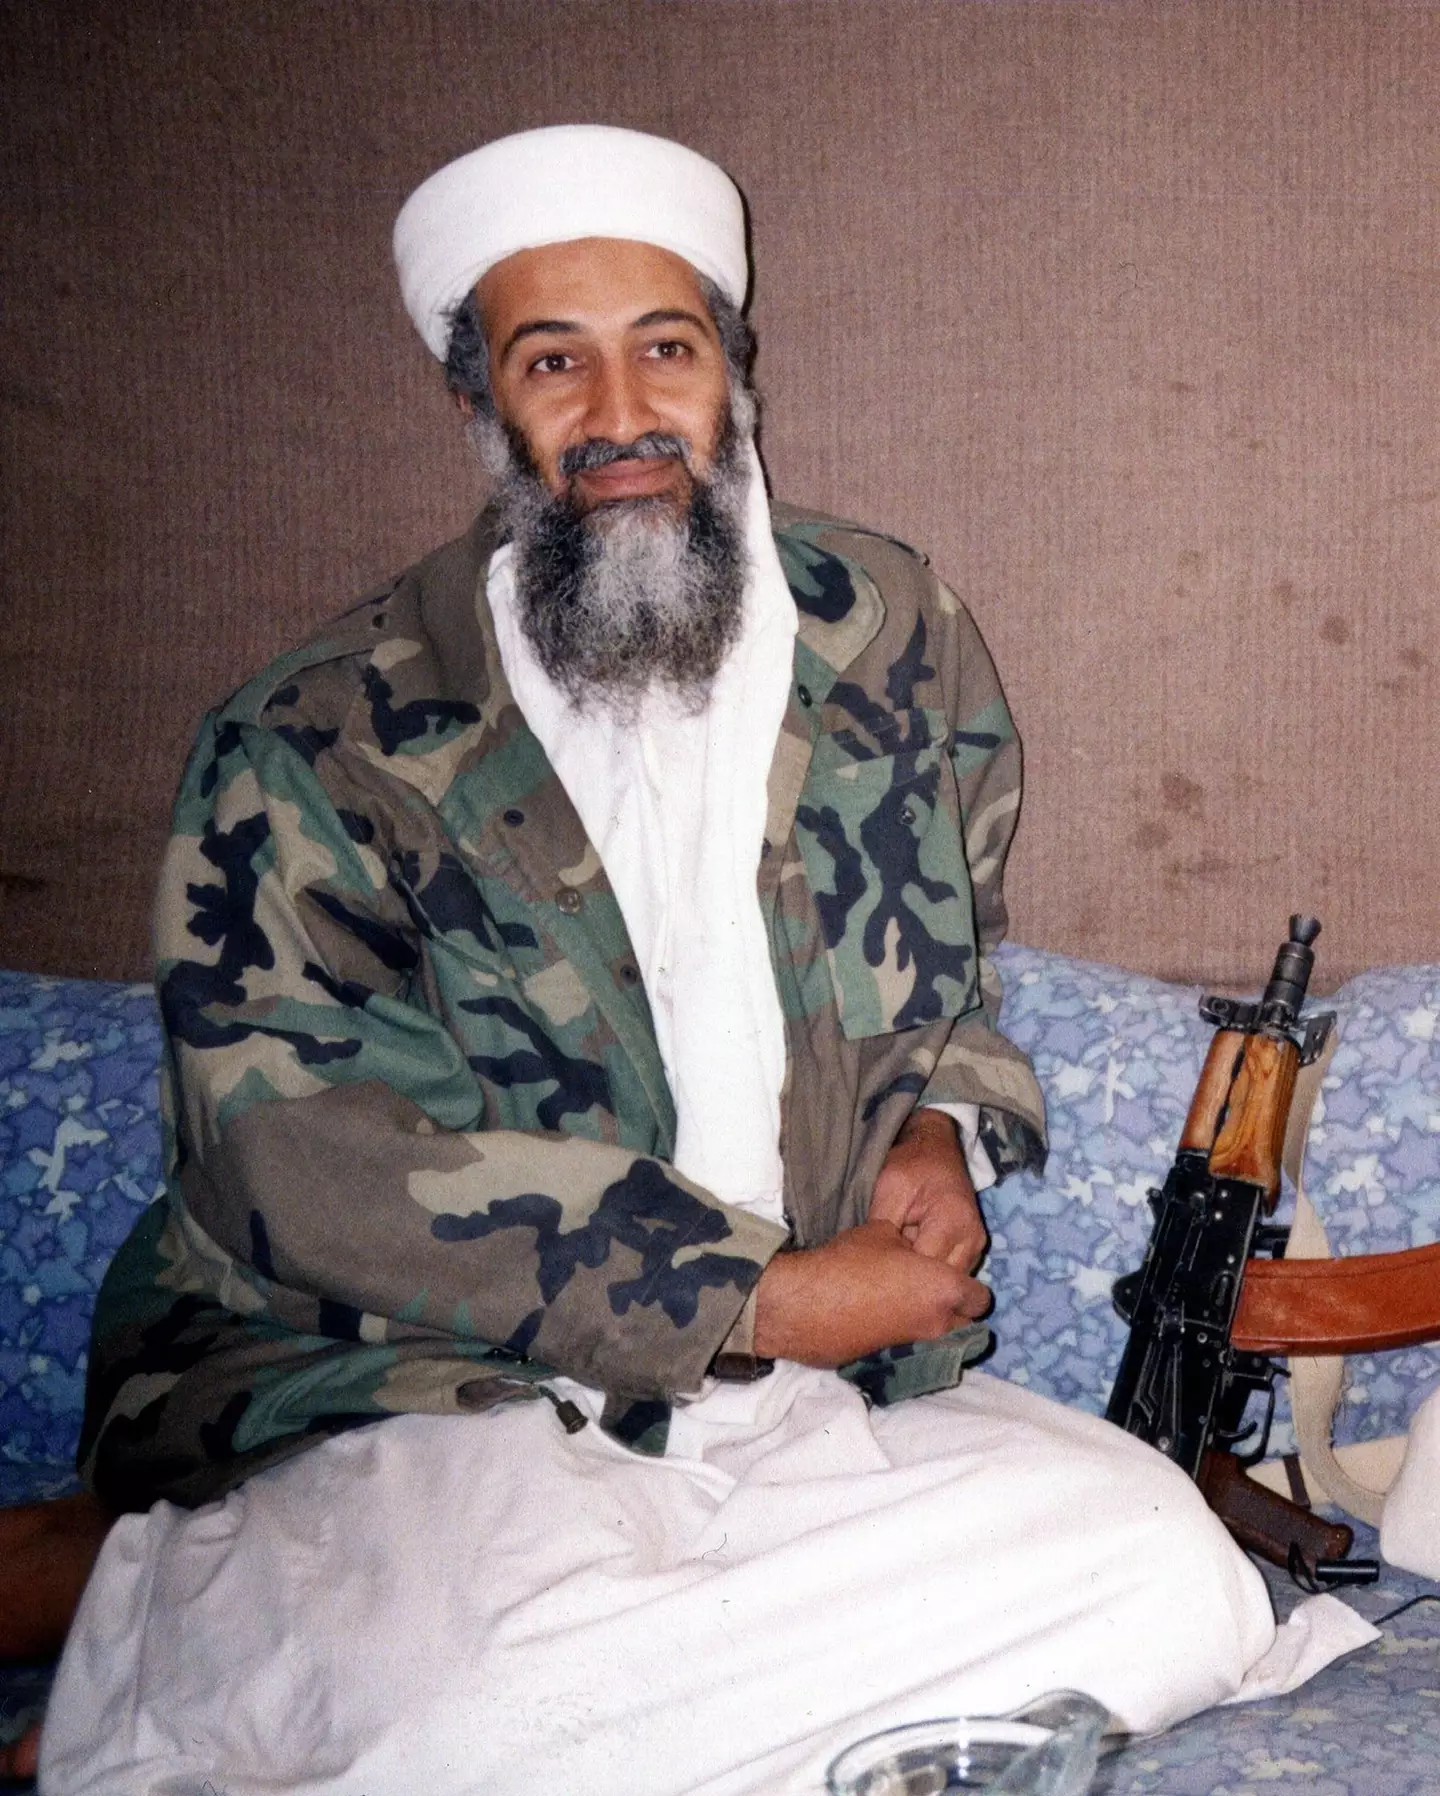 Zero Dark Thirty follows a CIA agent’s hunt for Osama bin Laden.